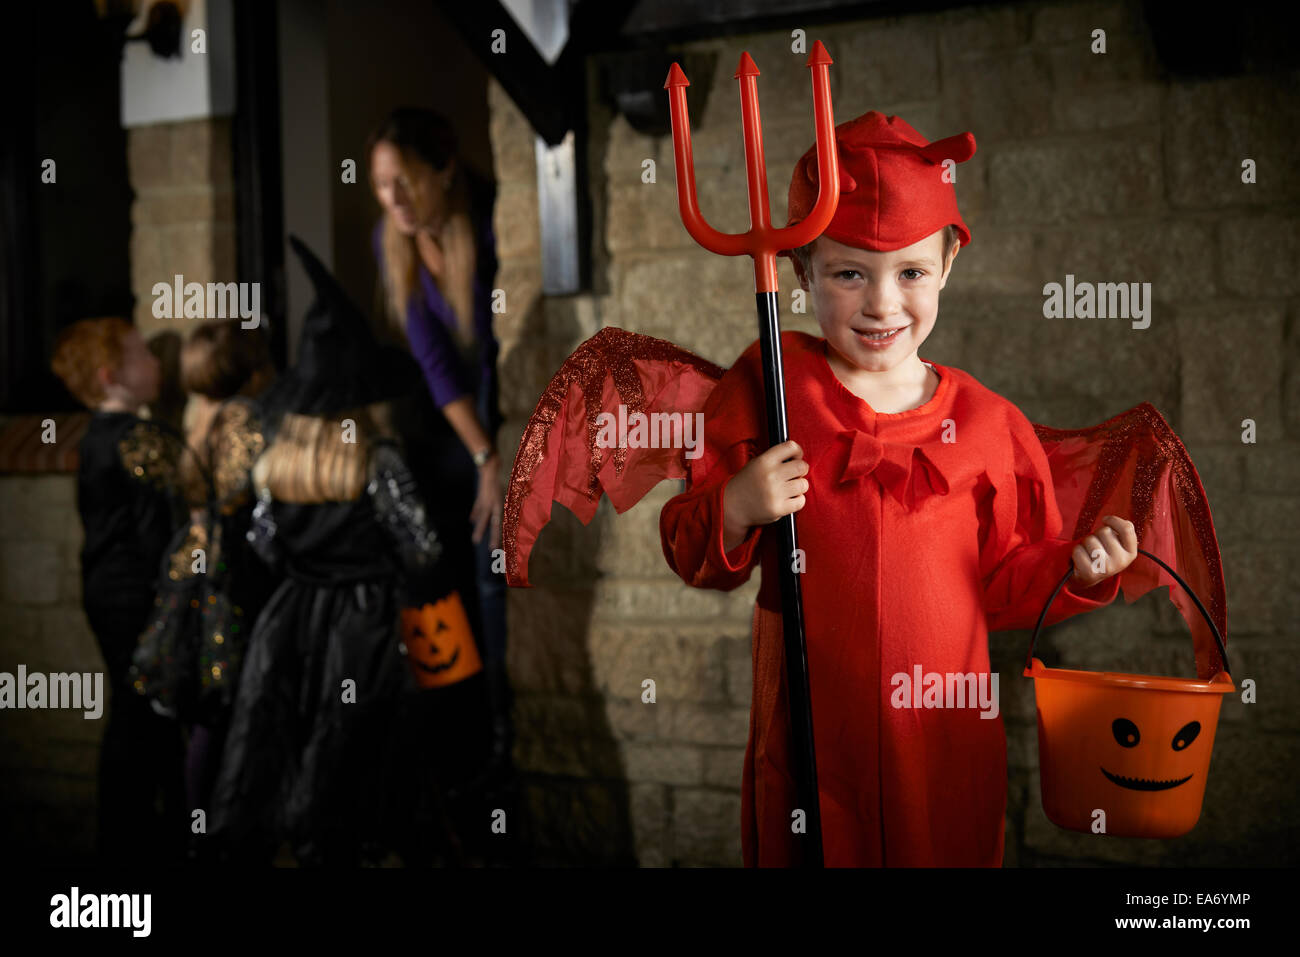 Halloween Party avec enfants trick or treating en costume Banque D'Images